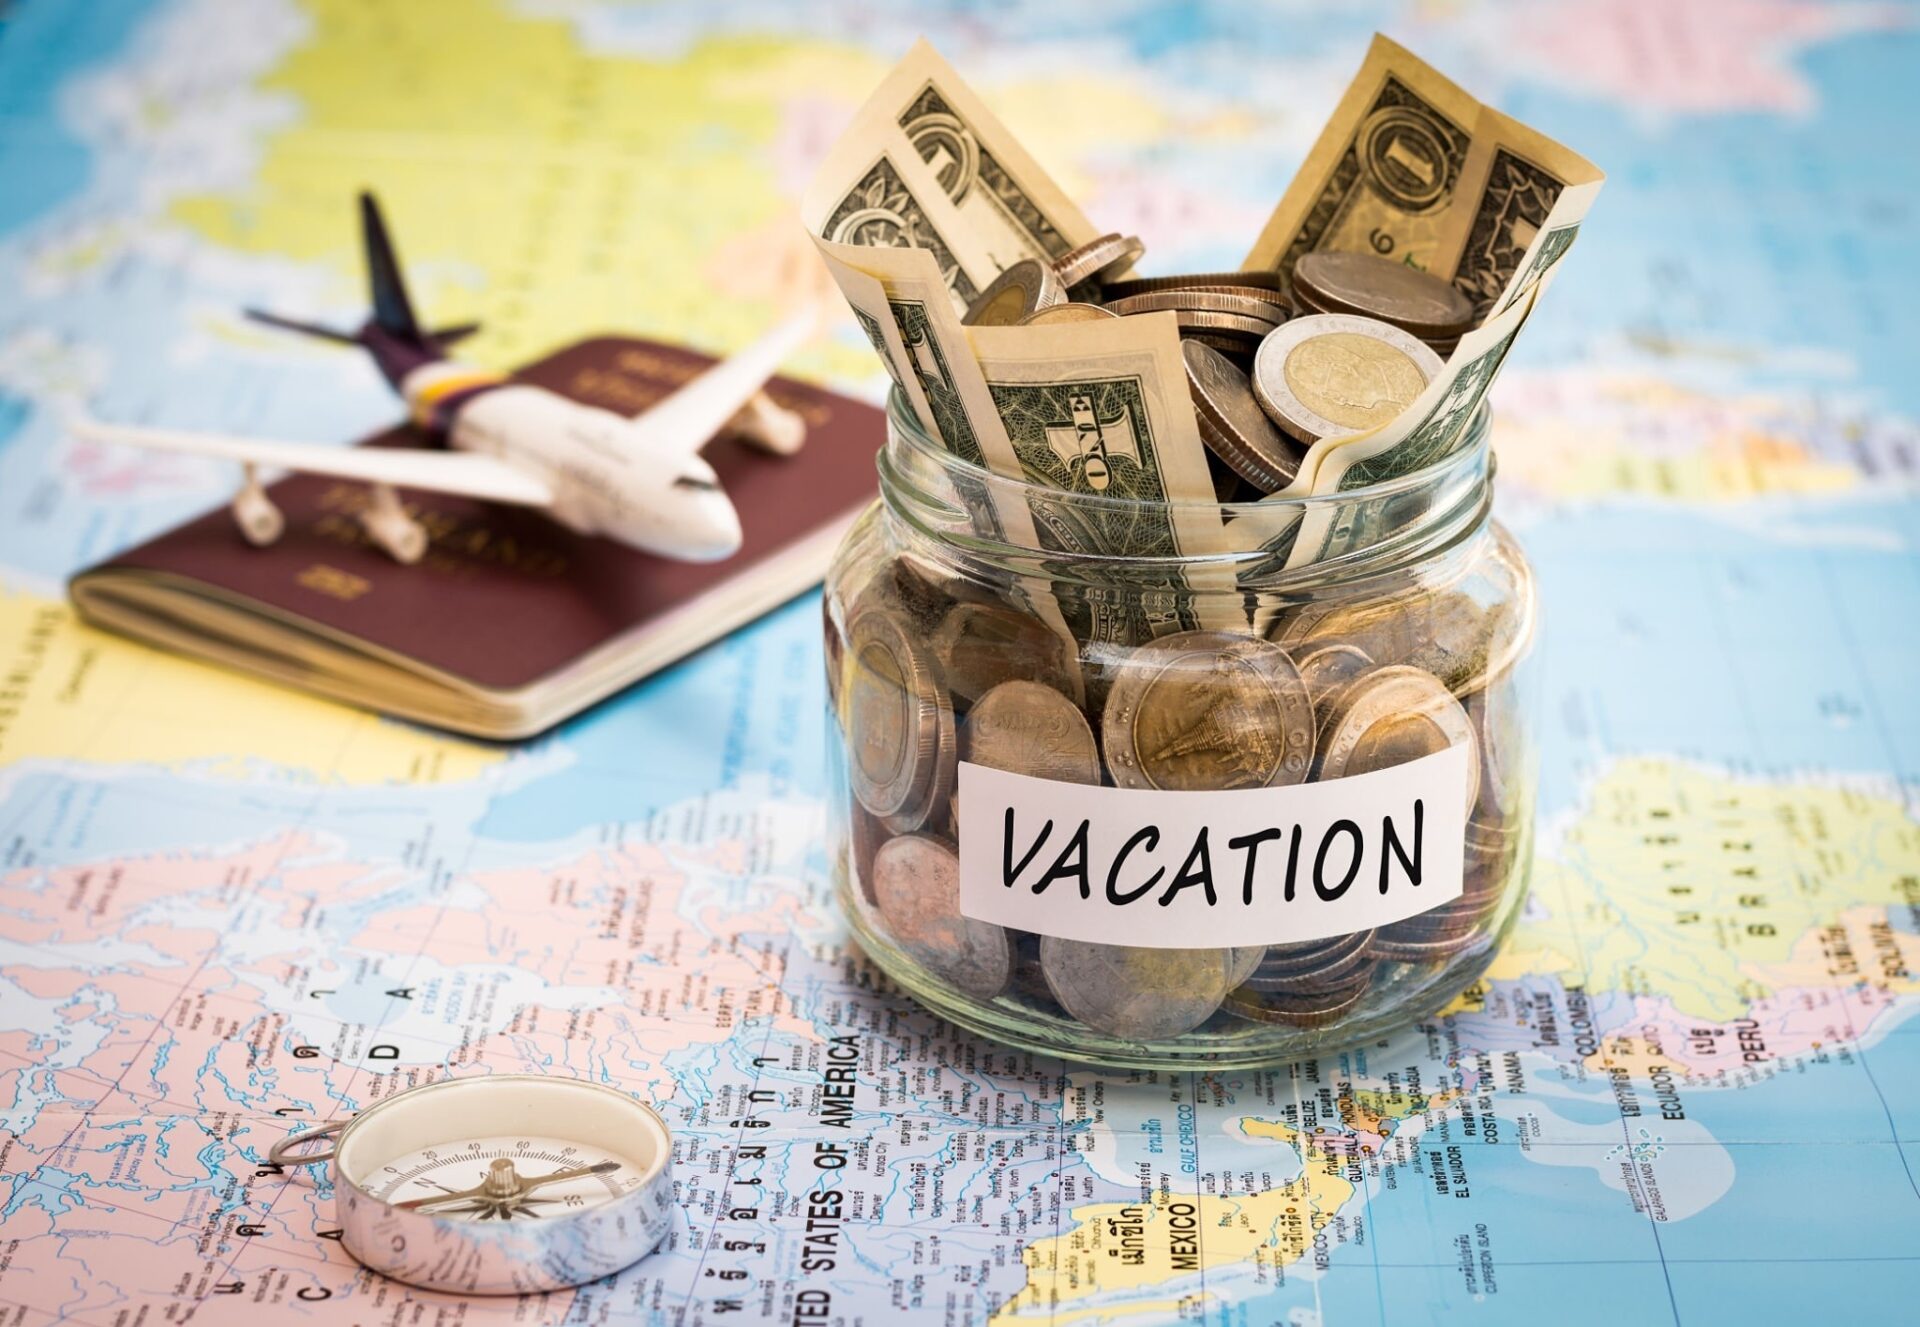 Saving Money on Your Next Vacation